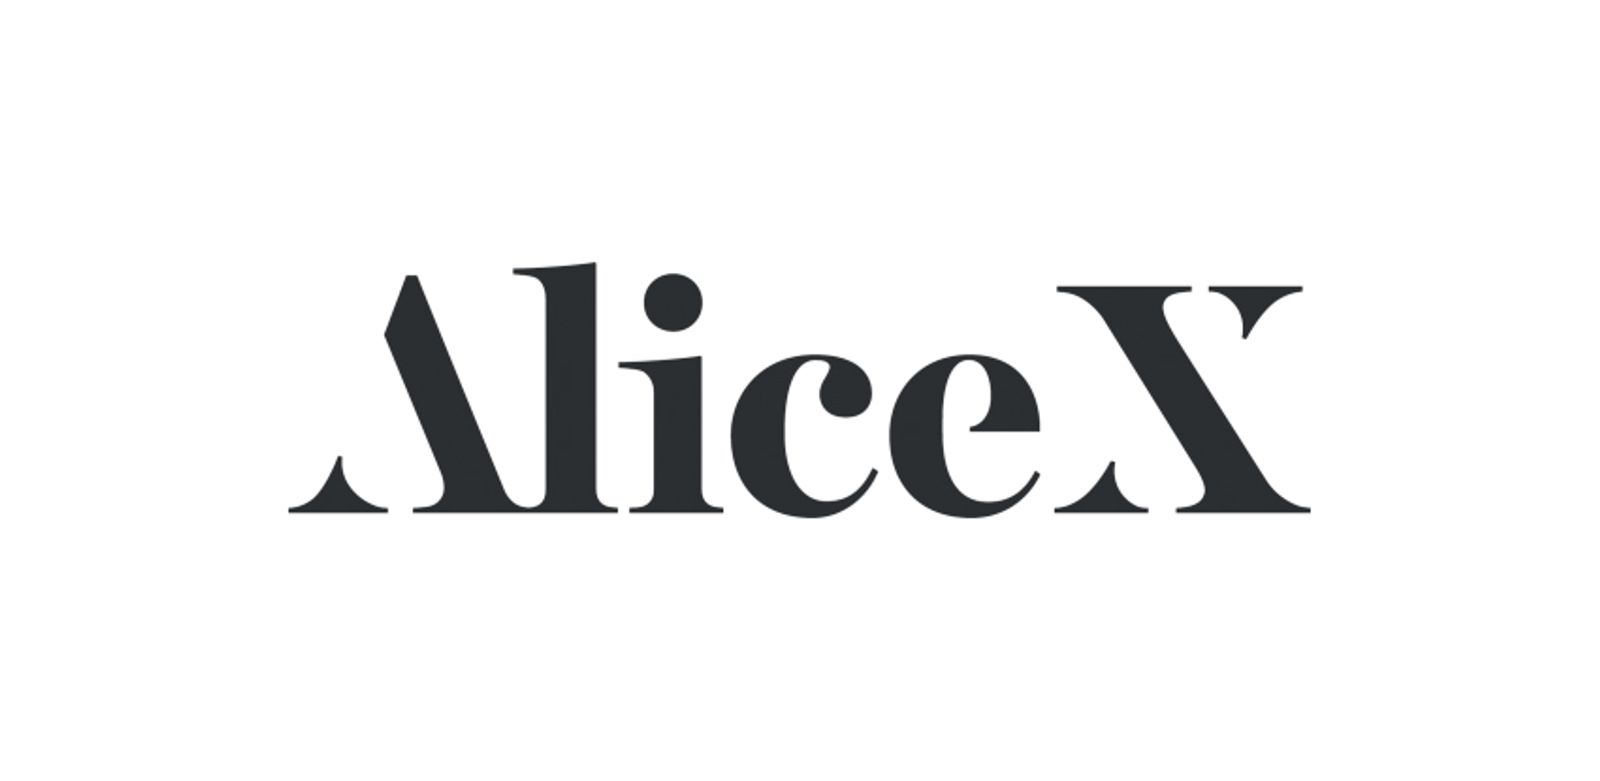 AliceX.com CEO Fabian Grey to Participate in Panel at Phoenix Forum